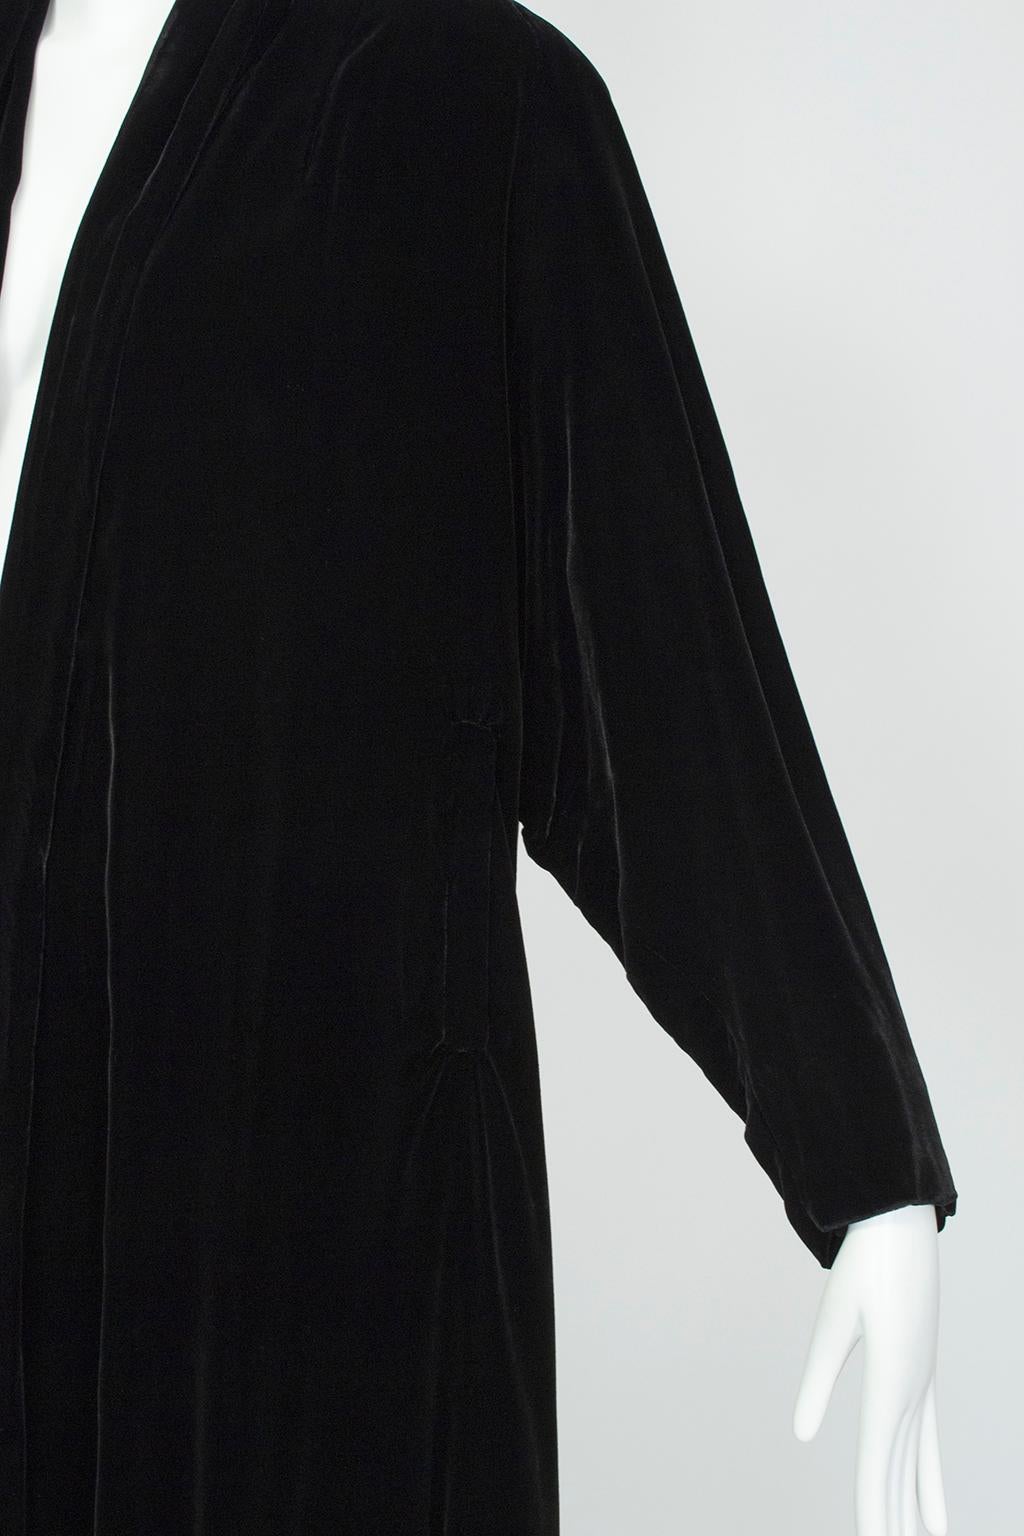 Black Silk Velvet Opera Clutch Swing Coat with Balloon Raglan Sleeve – S, 1950s  For Sale 1